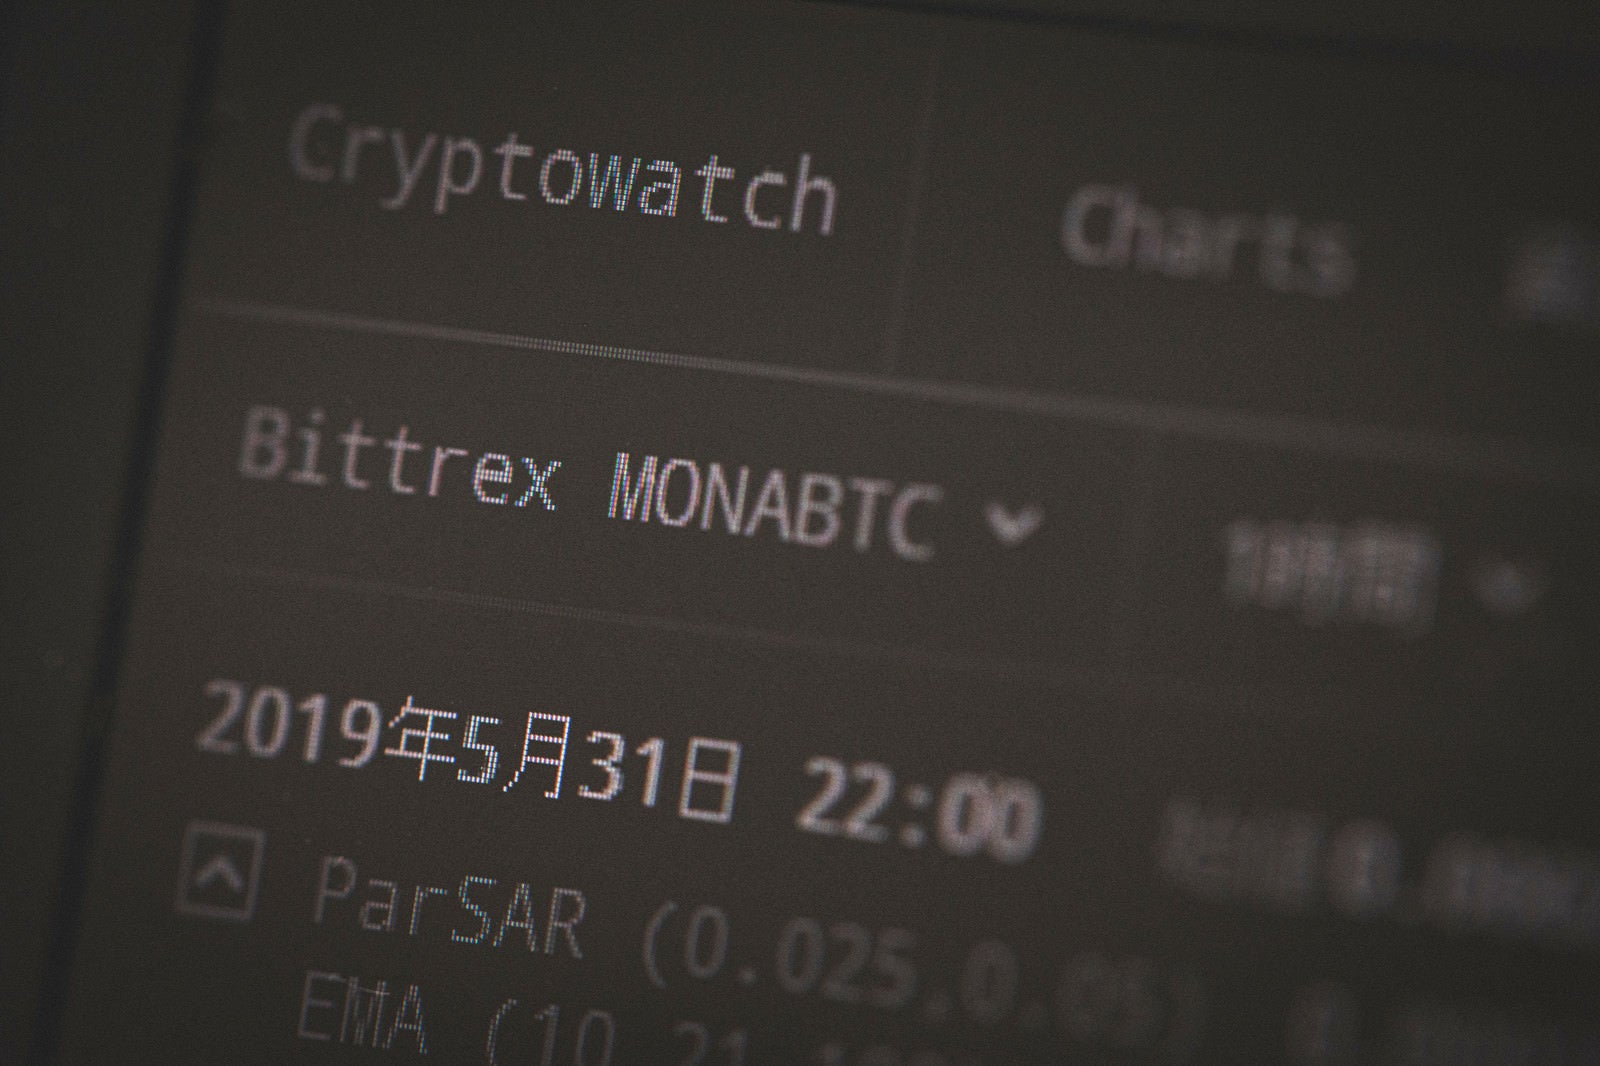 「Cryptowatch で MONABTC を確認」の写真